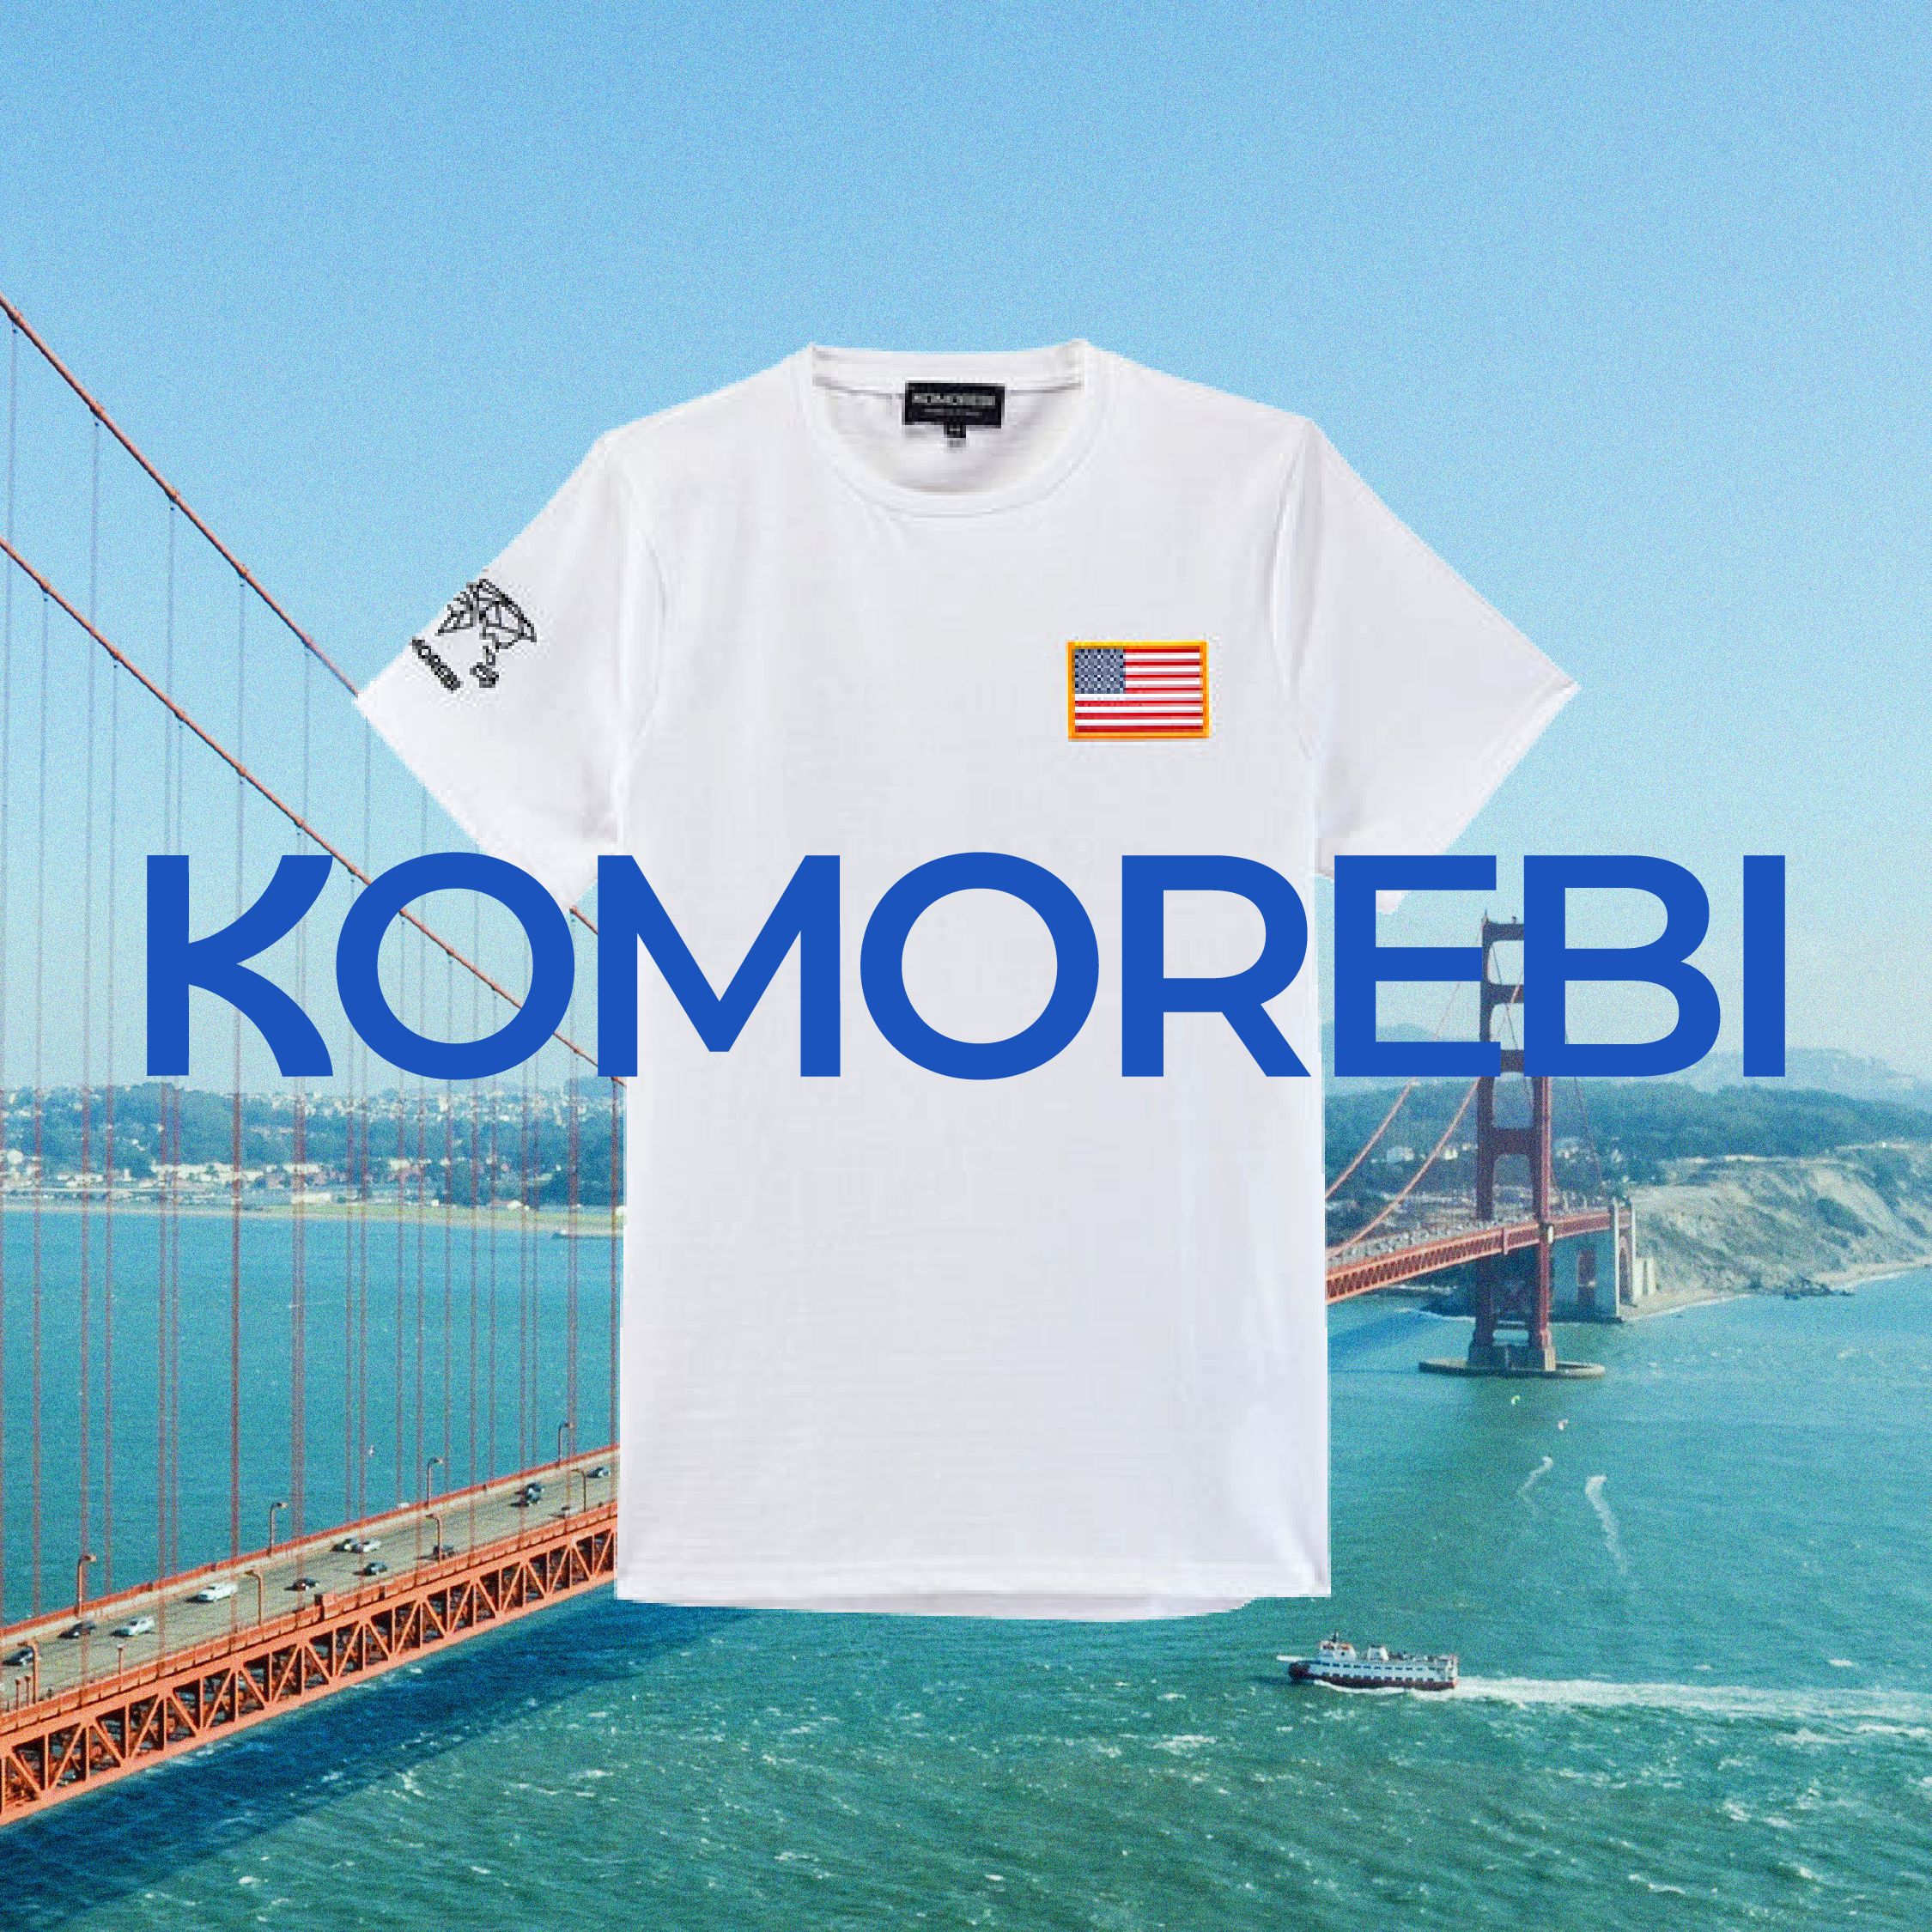 Komorebi Branding